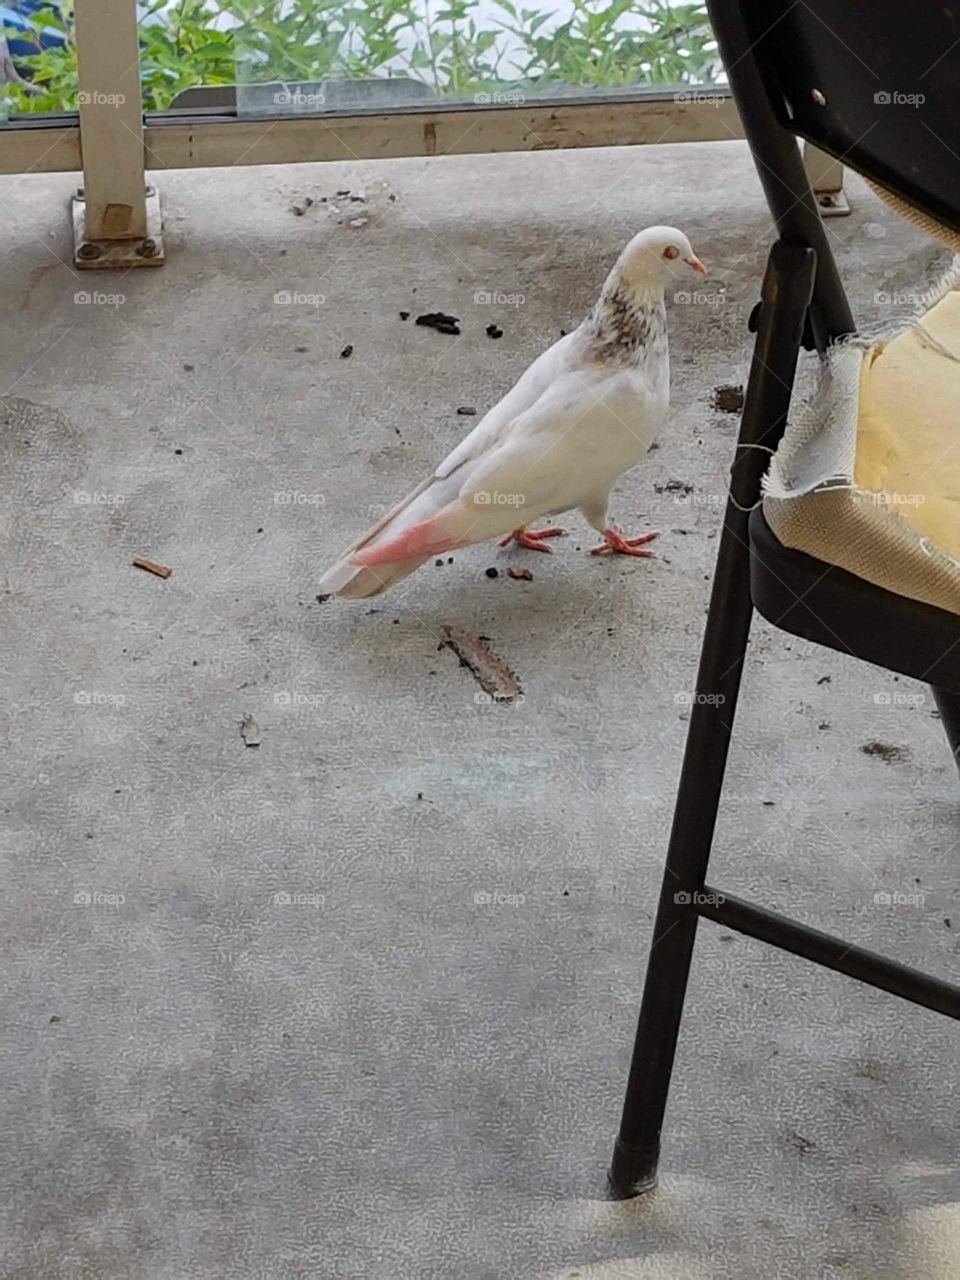 intruder, dove, pigeon, white bird, inside, home, mess,